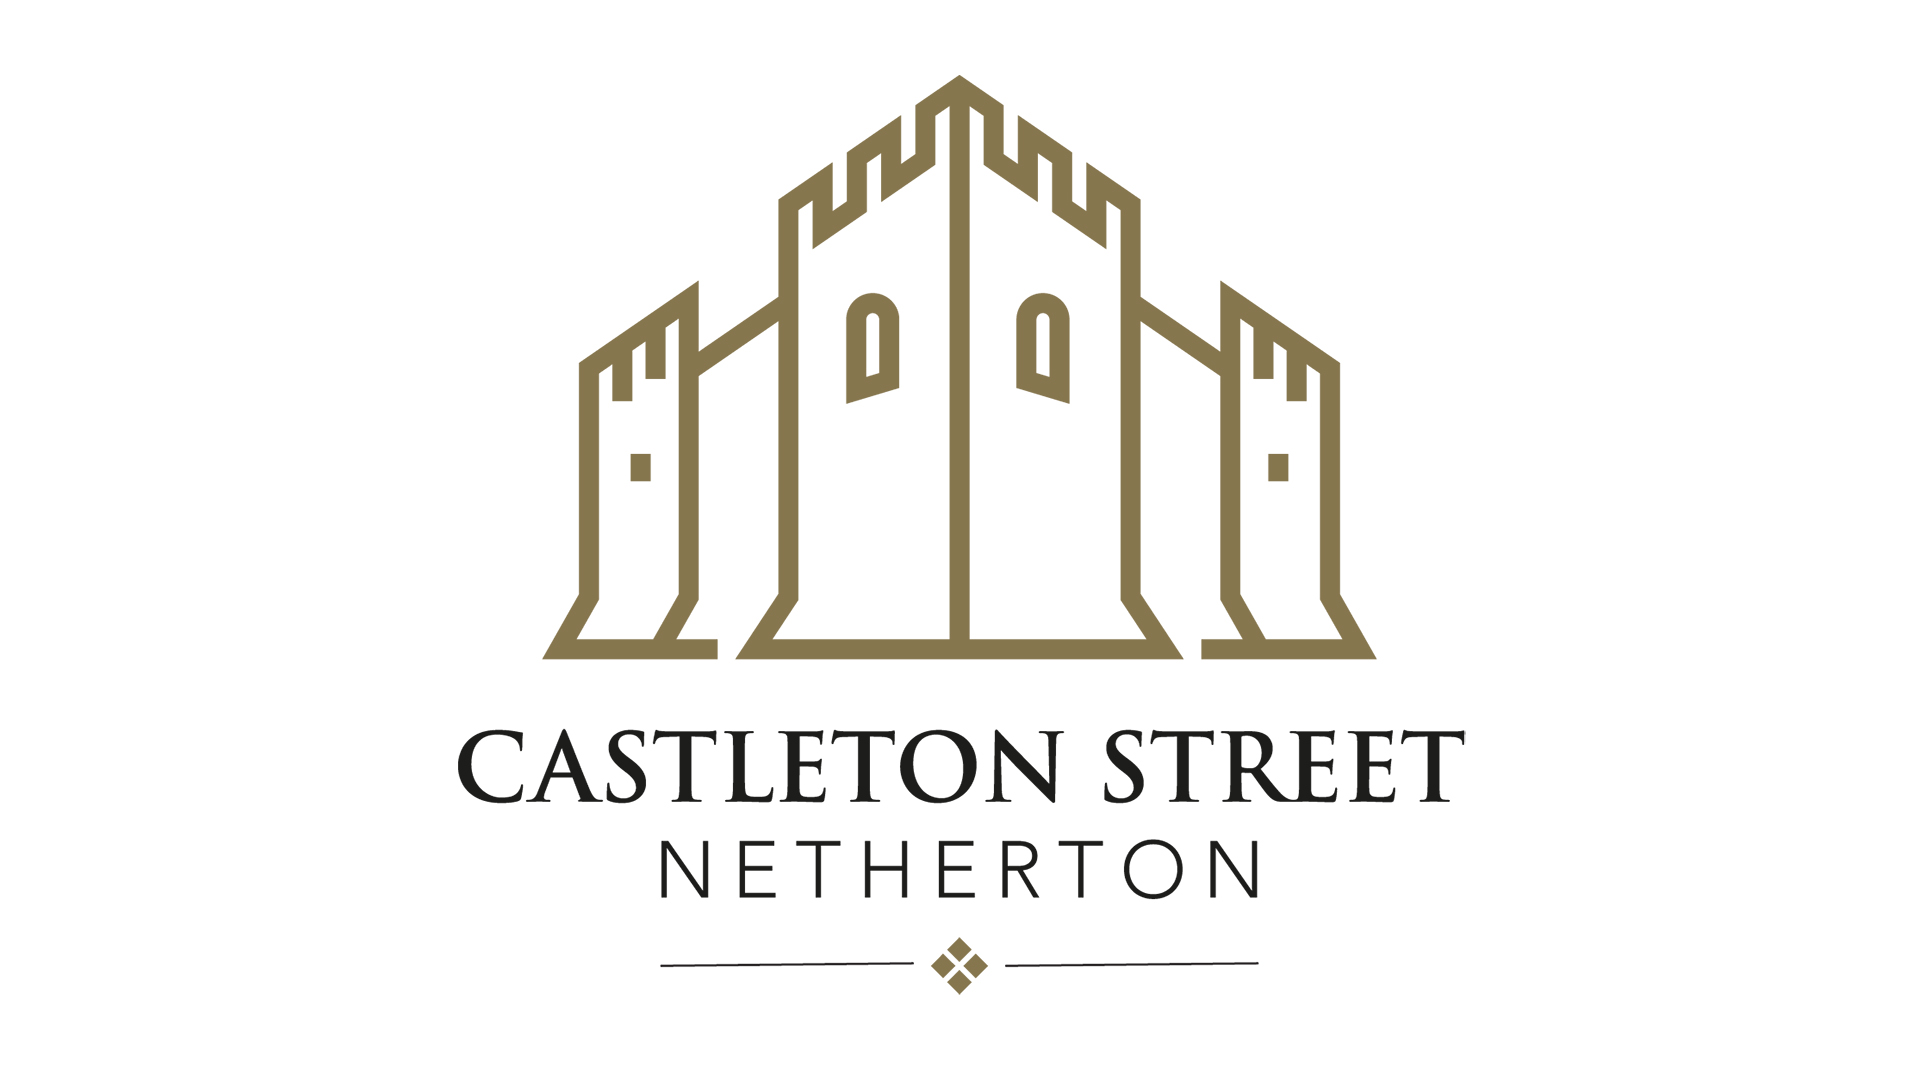 Castleton Street, Netherton